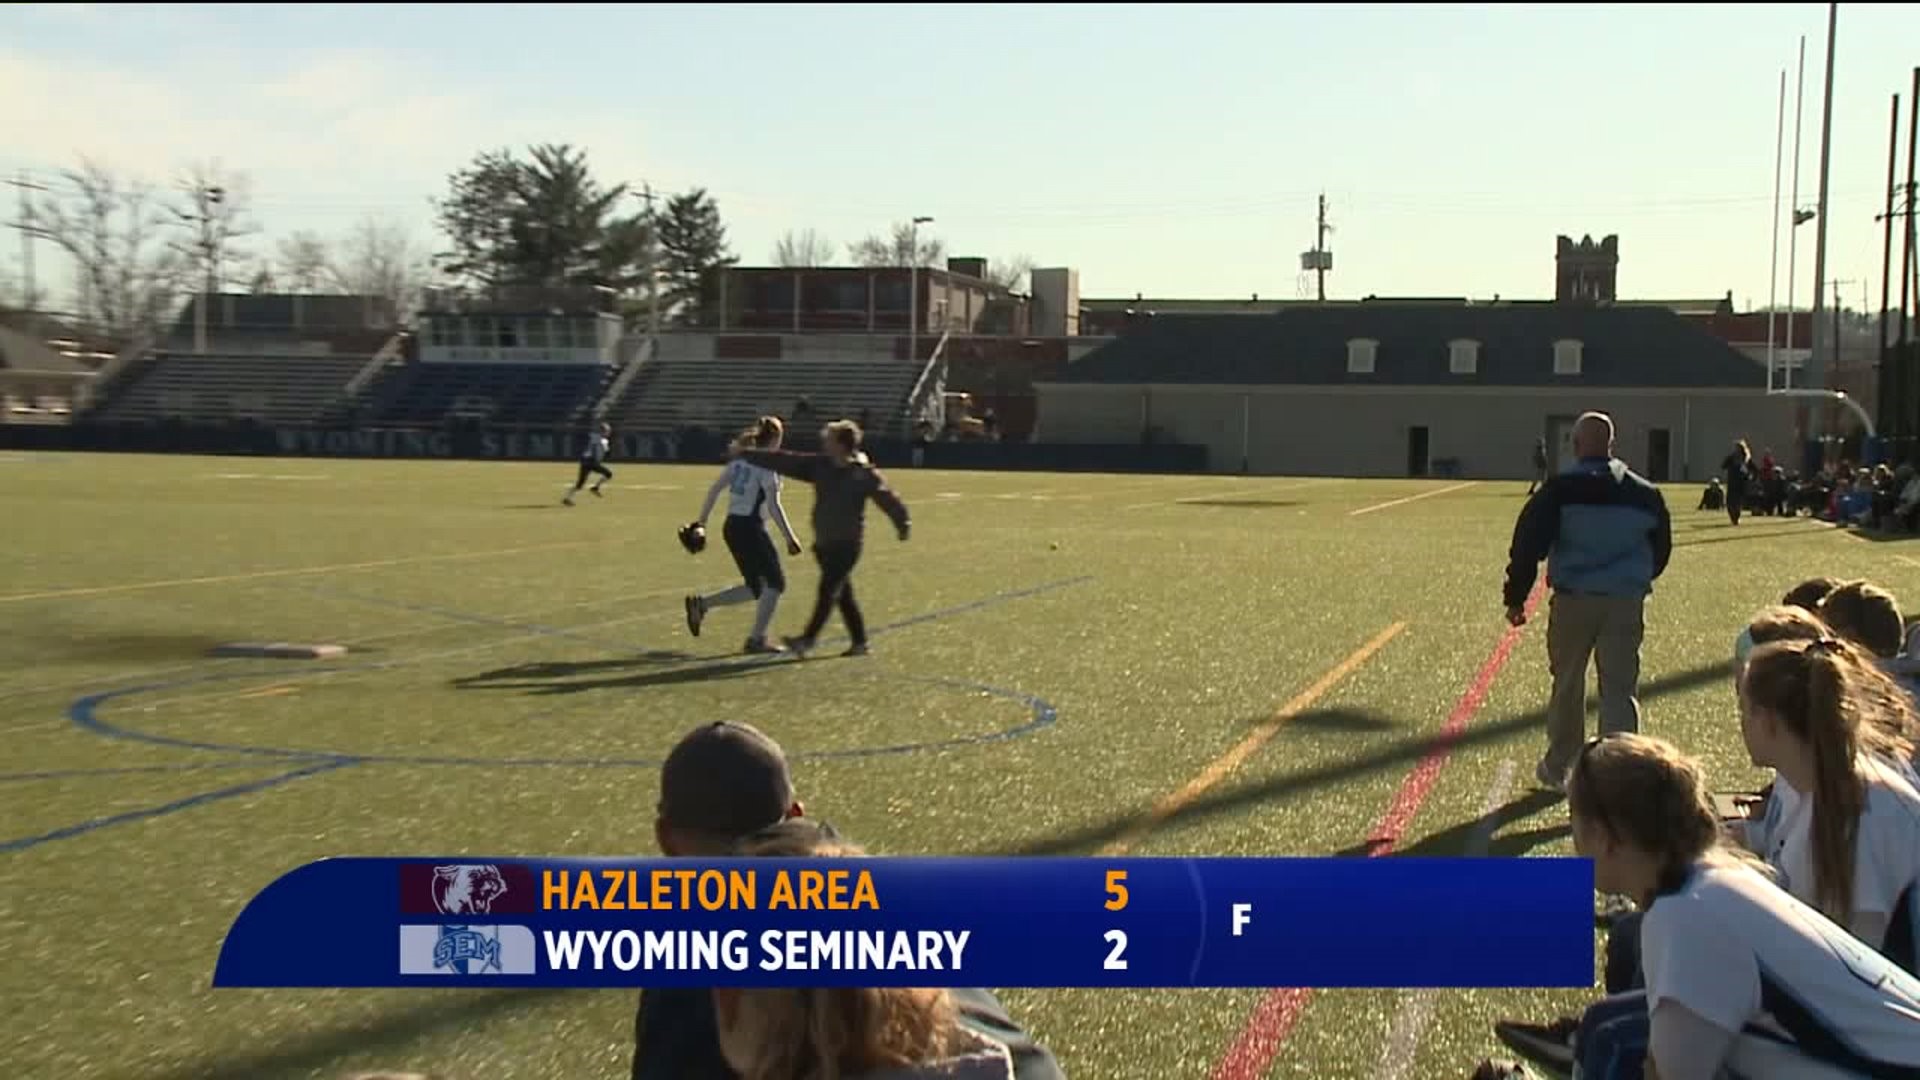 Hazleton Area vs Wyoming Seminary softball